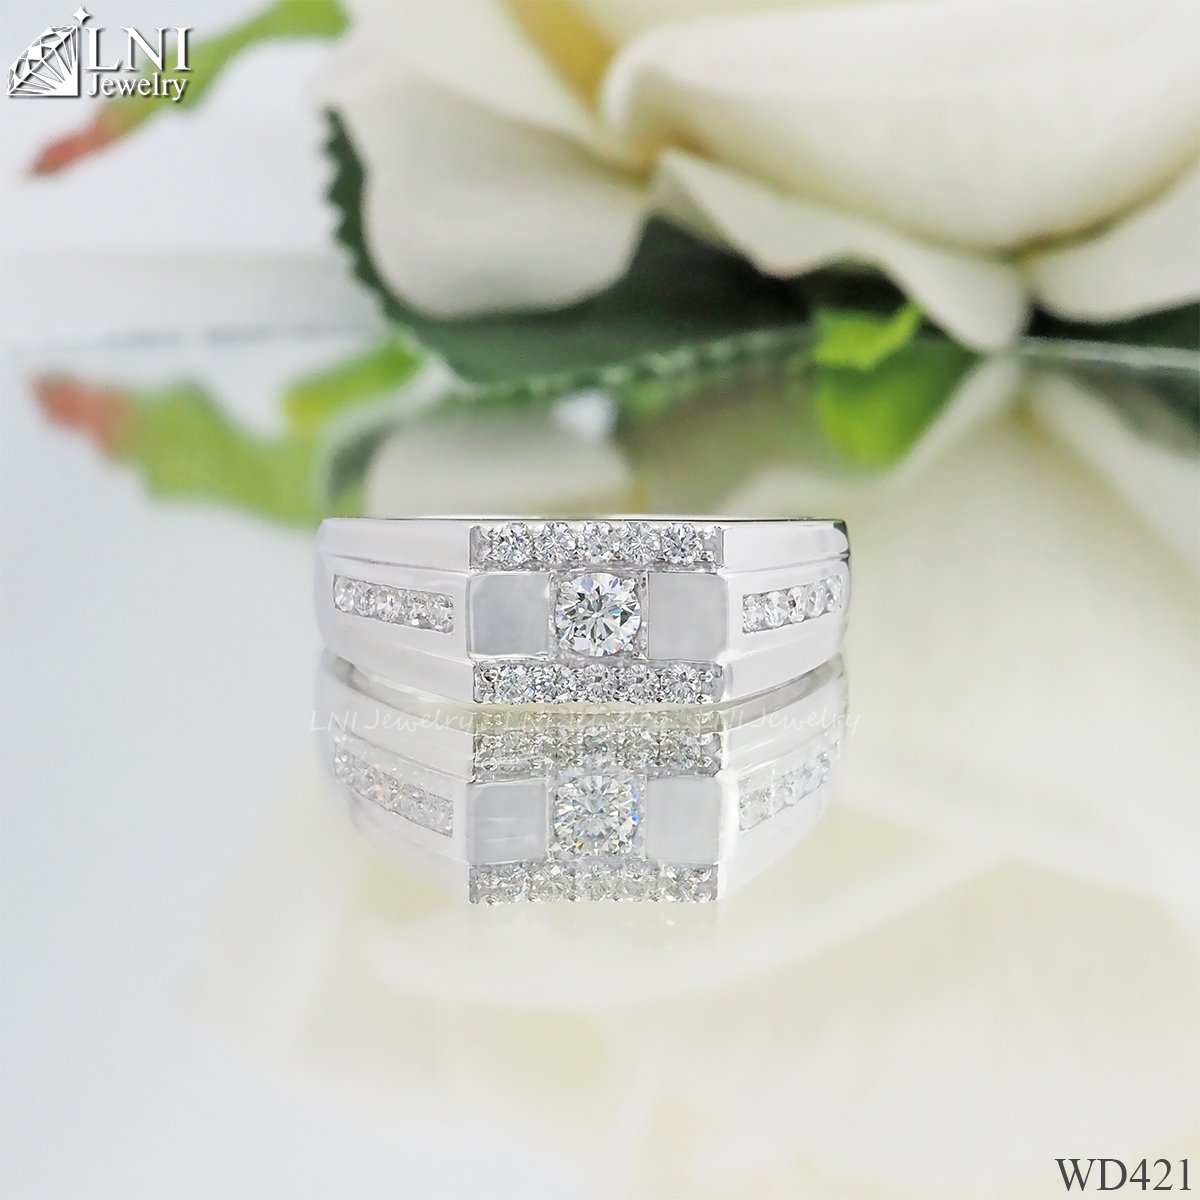 WD421 Diamond Ring